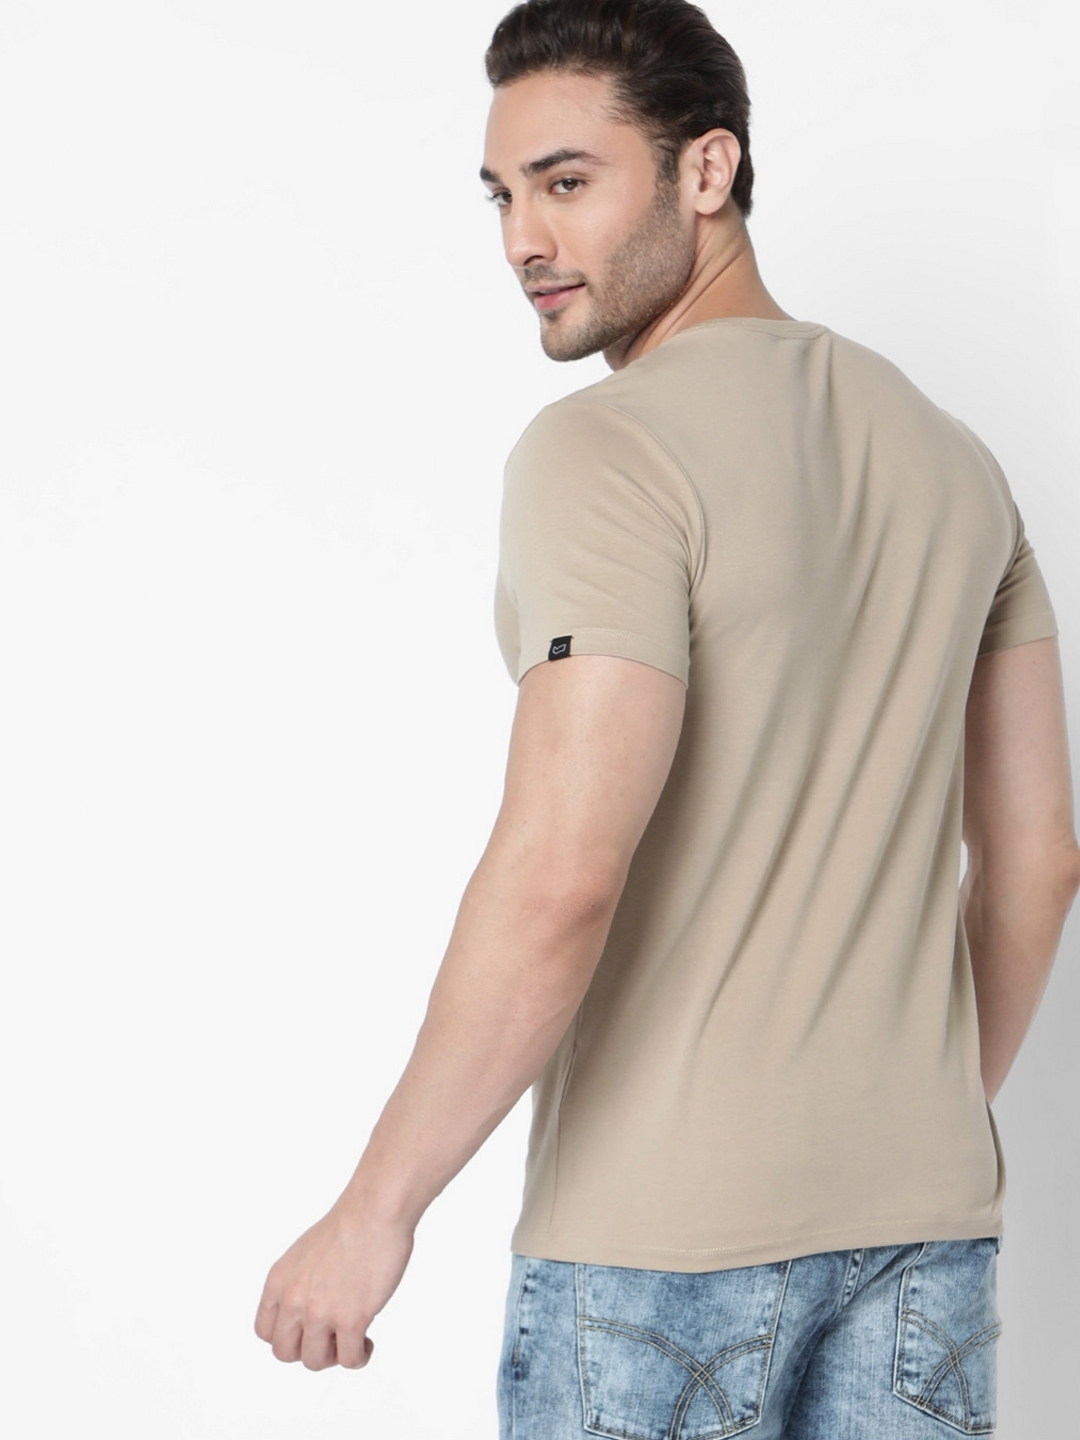 Men's Scuba Gas Printed Round Neck Sand Beige T-Shirt